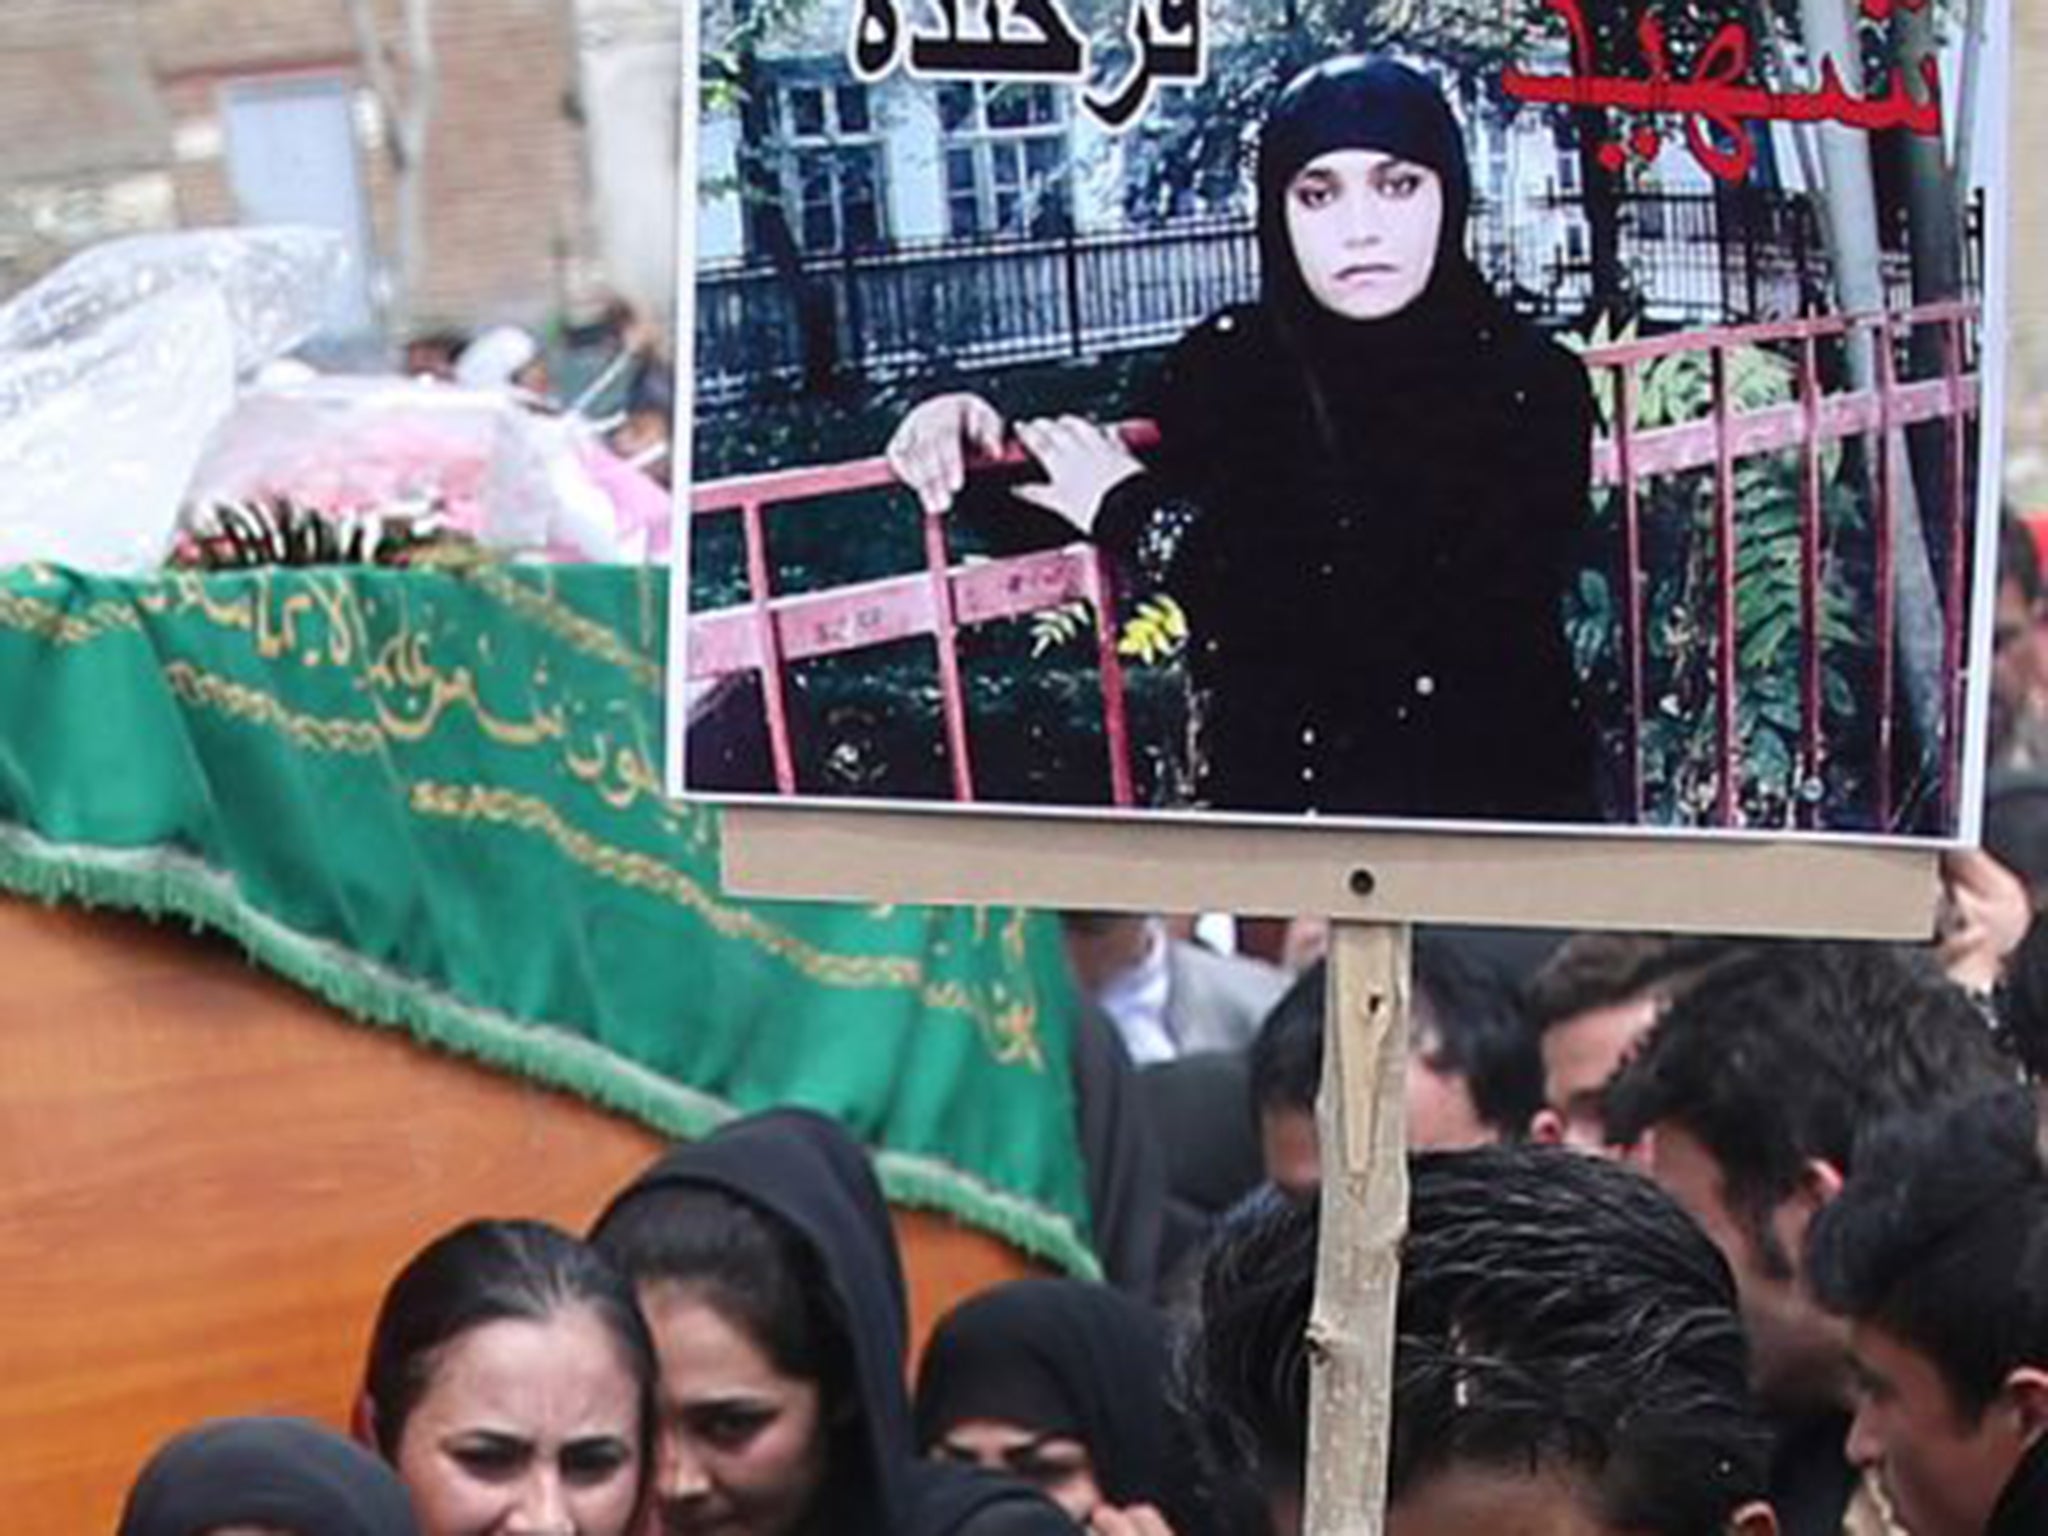 Farkhunda Malikzada was killed after being falsely accused of burning a Koran